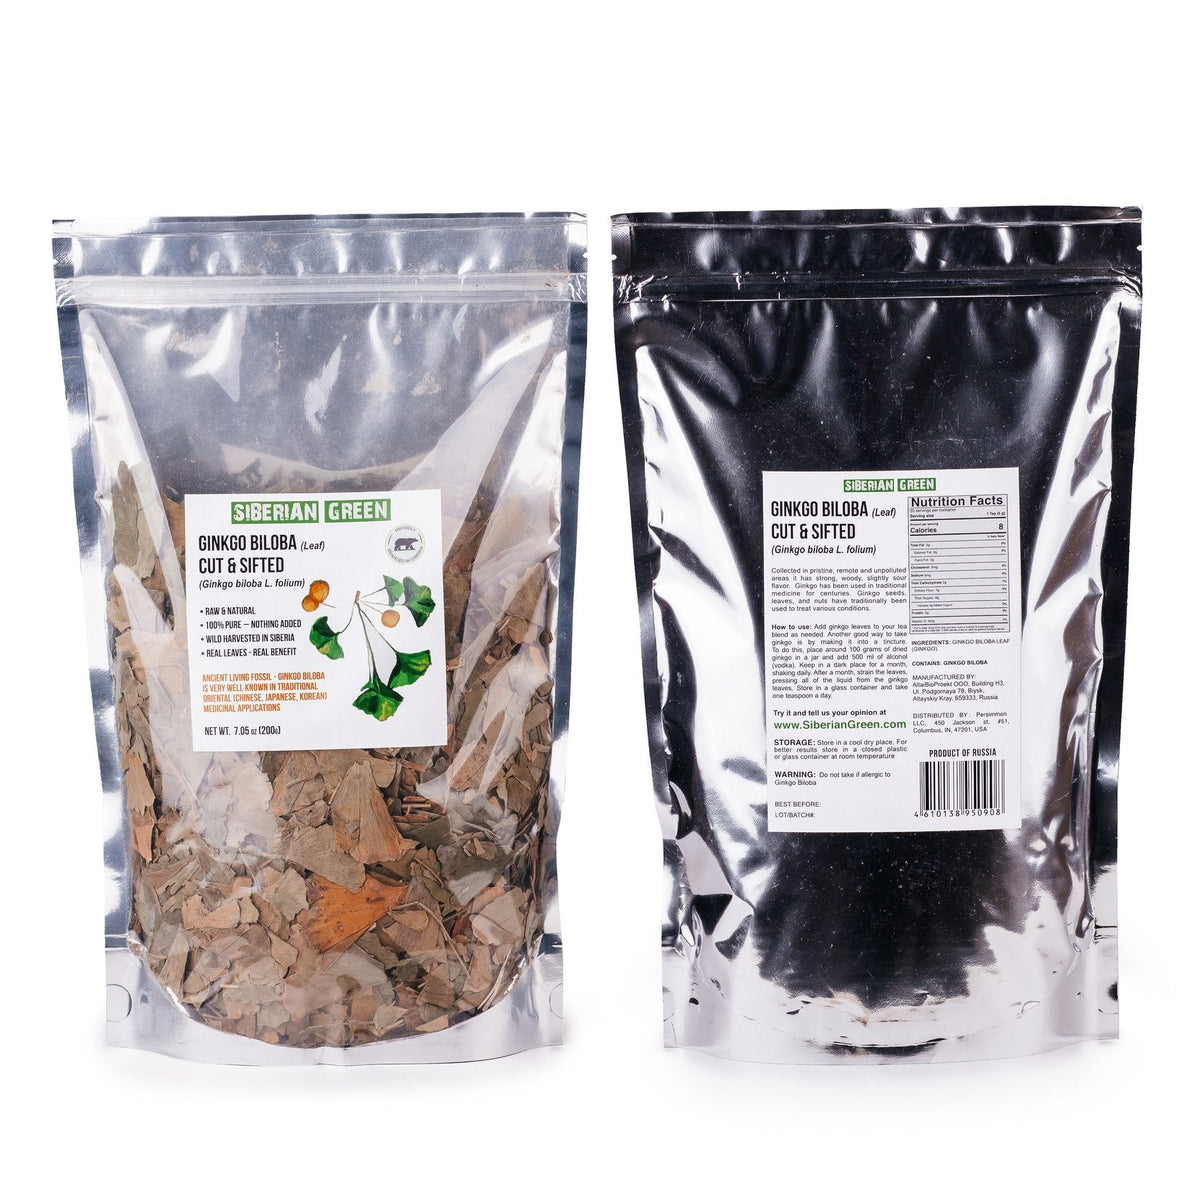 Siberian Green Ginkgo Biloba Cut and Sifted Leaf 200g Premium Loose Biloba Tea Pure Healthy Wild Harvest